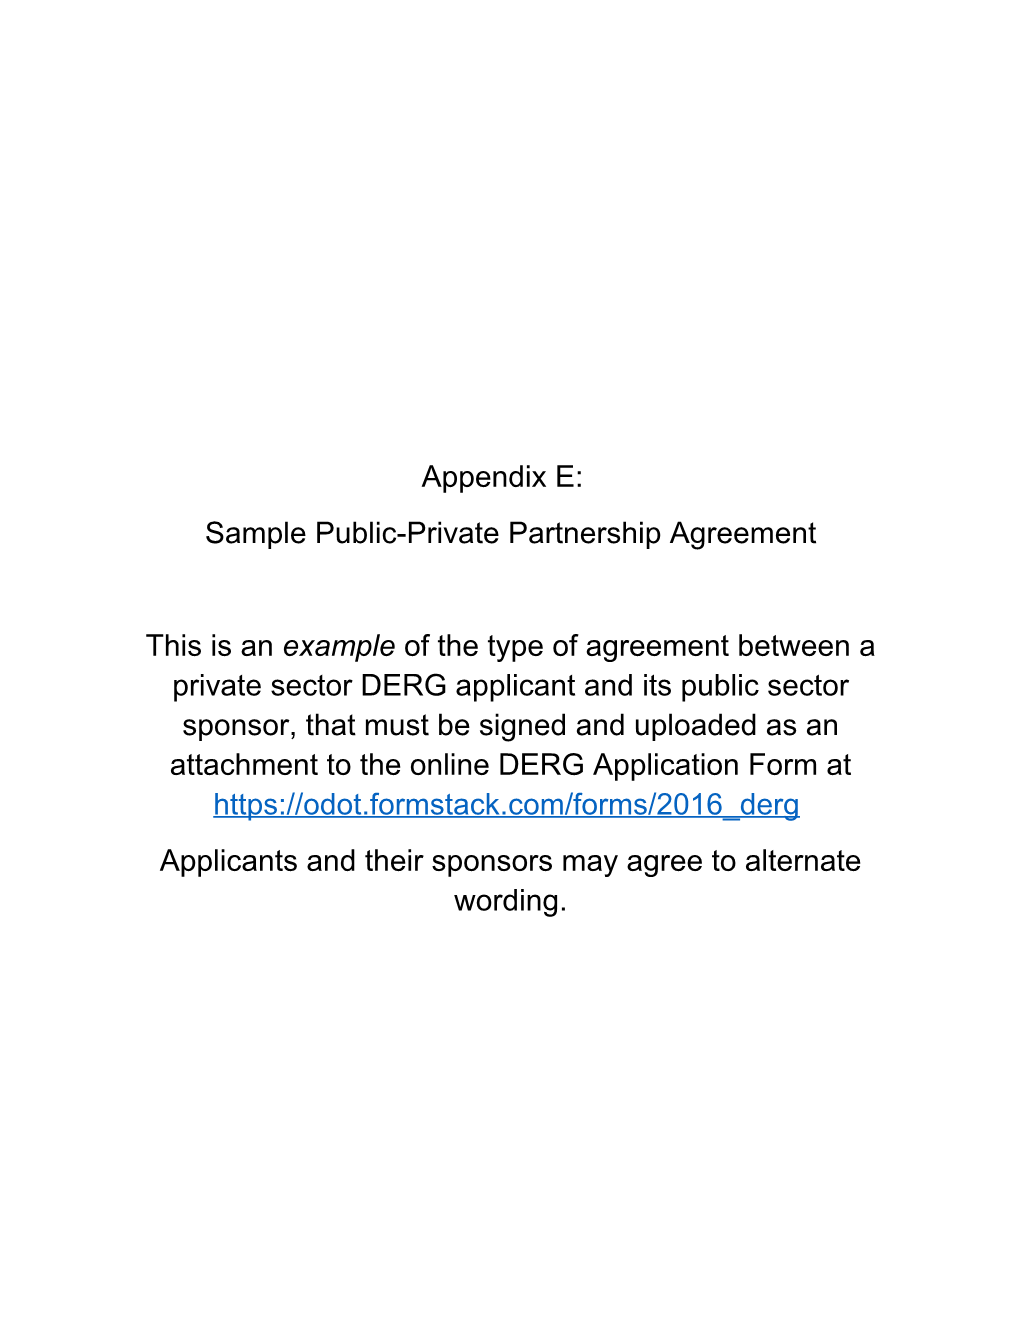 Sample Public-Private Partnership Agreement